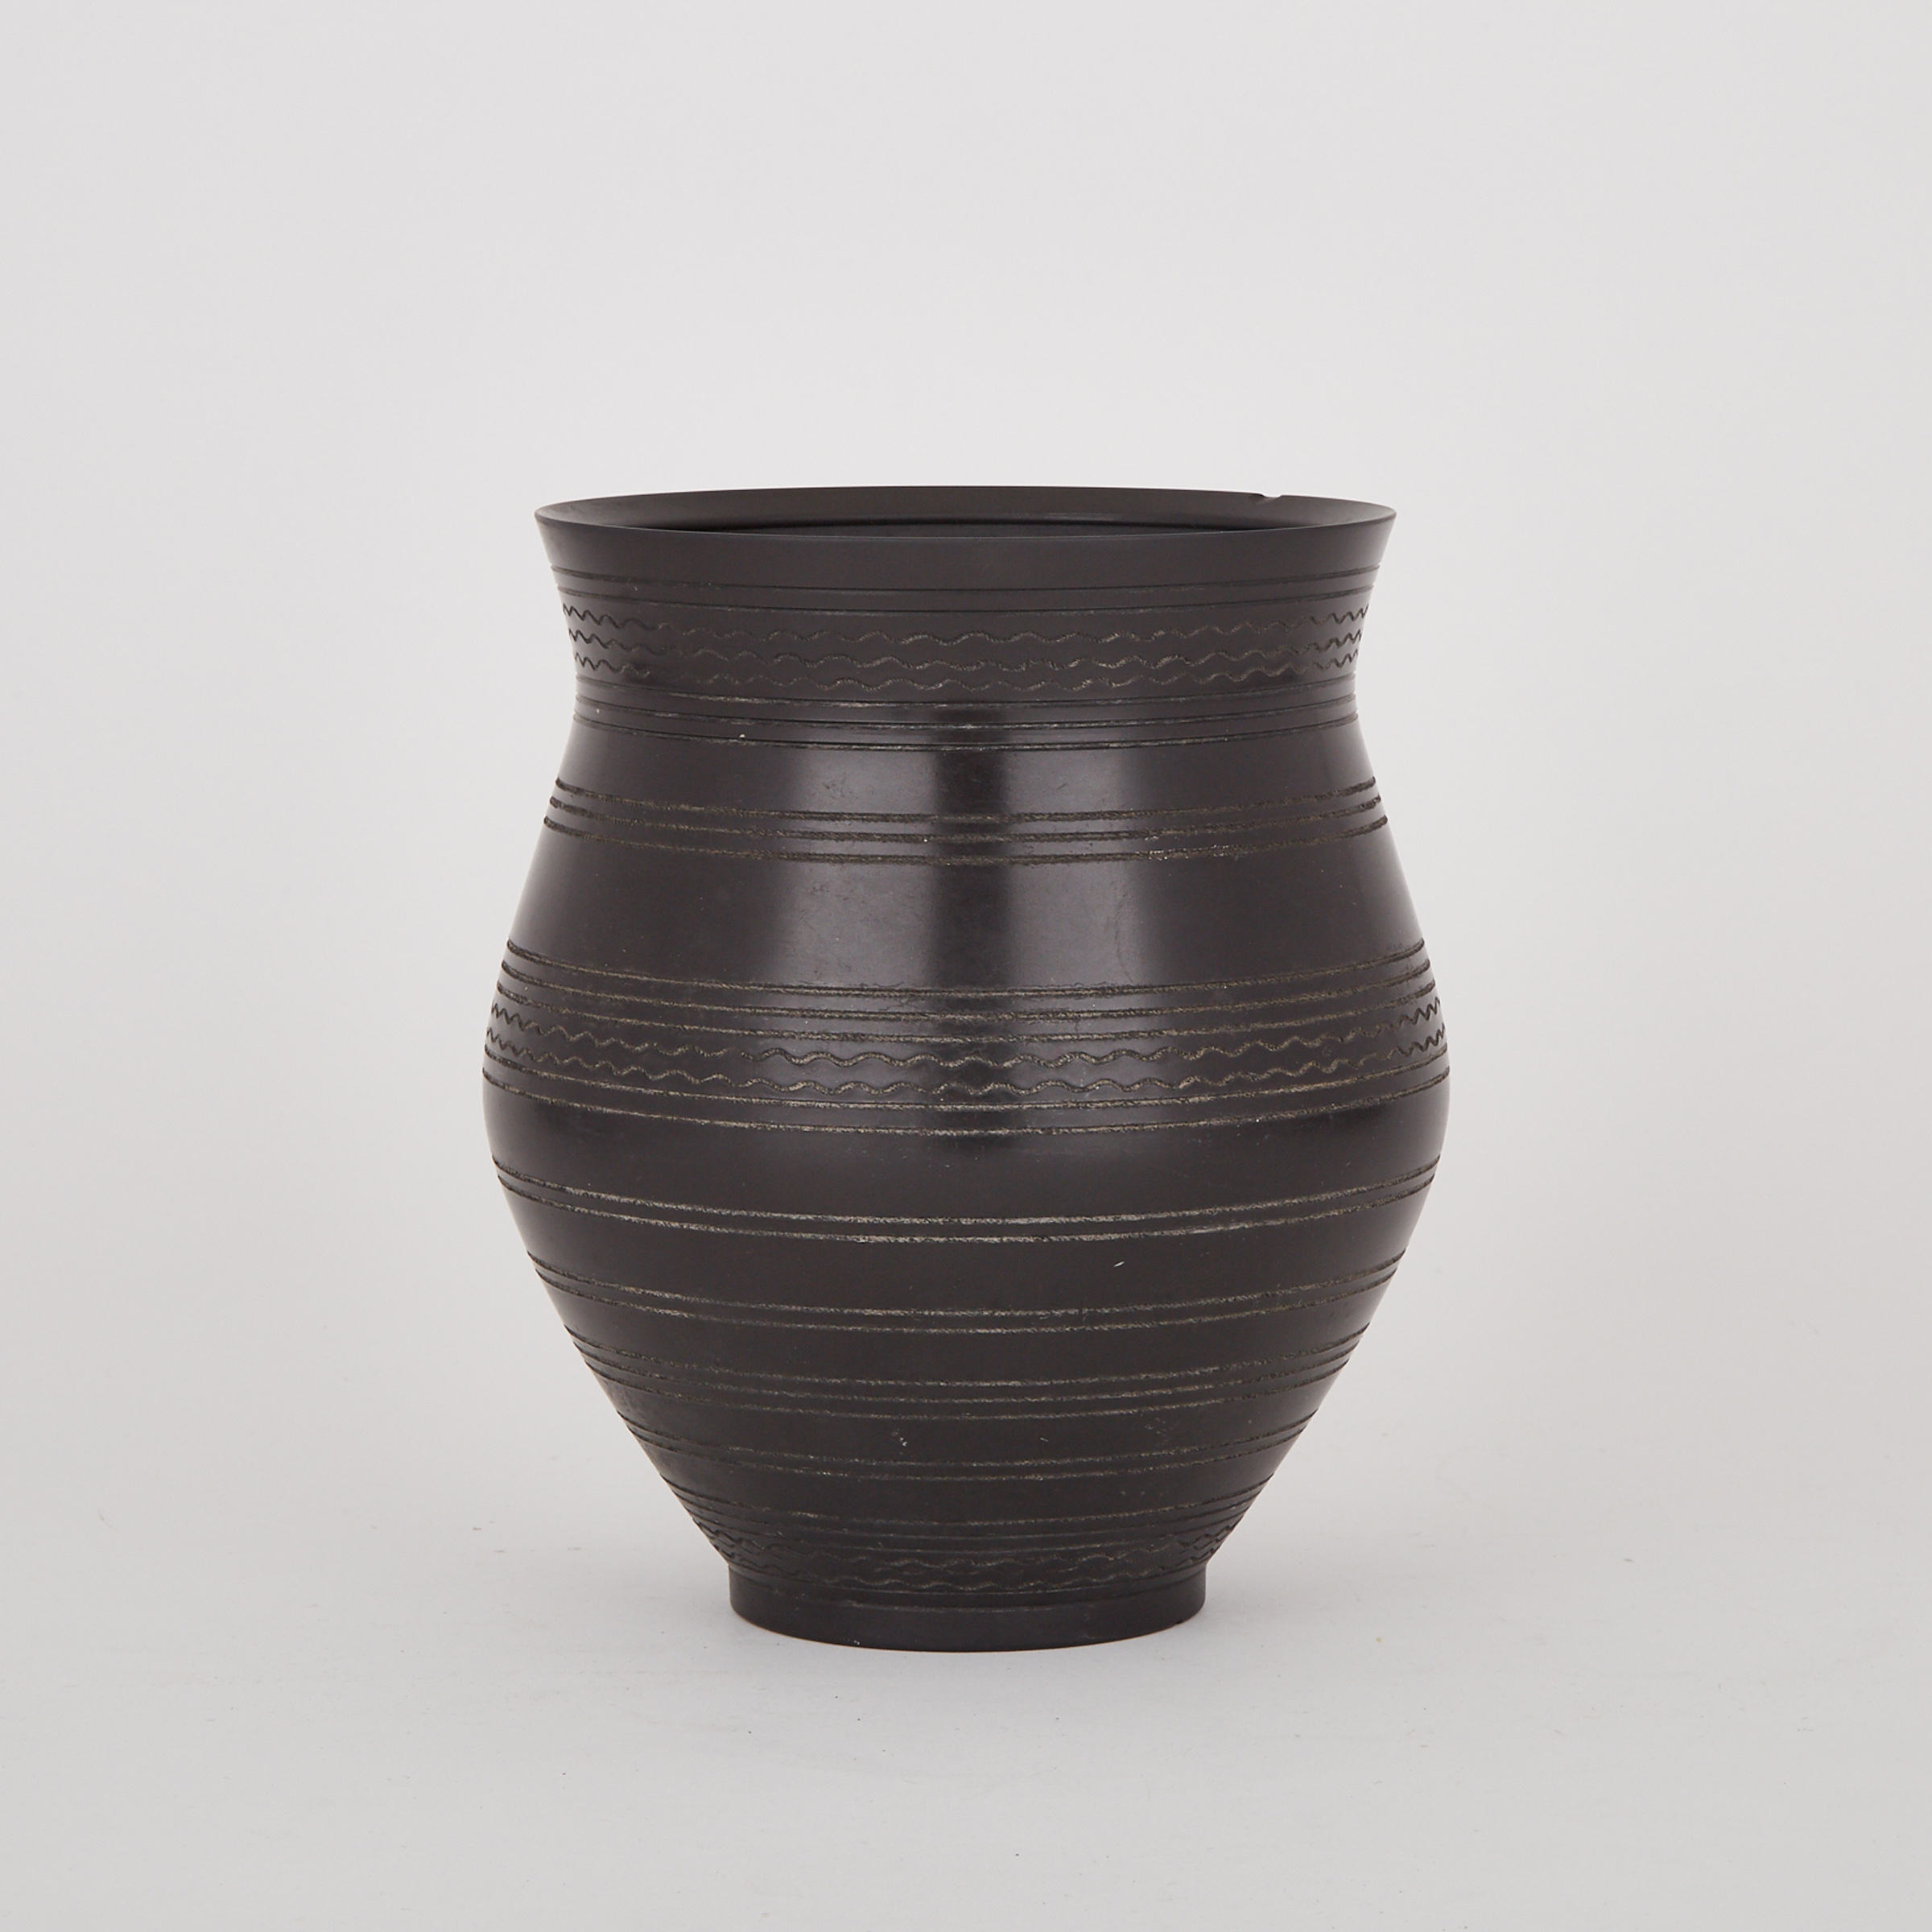 Wedgwood Black Basalt Vase, 19th century